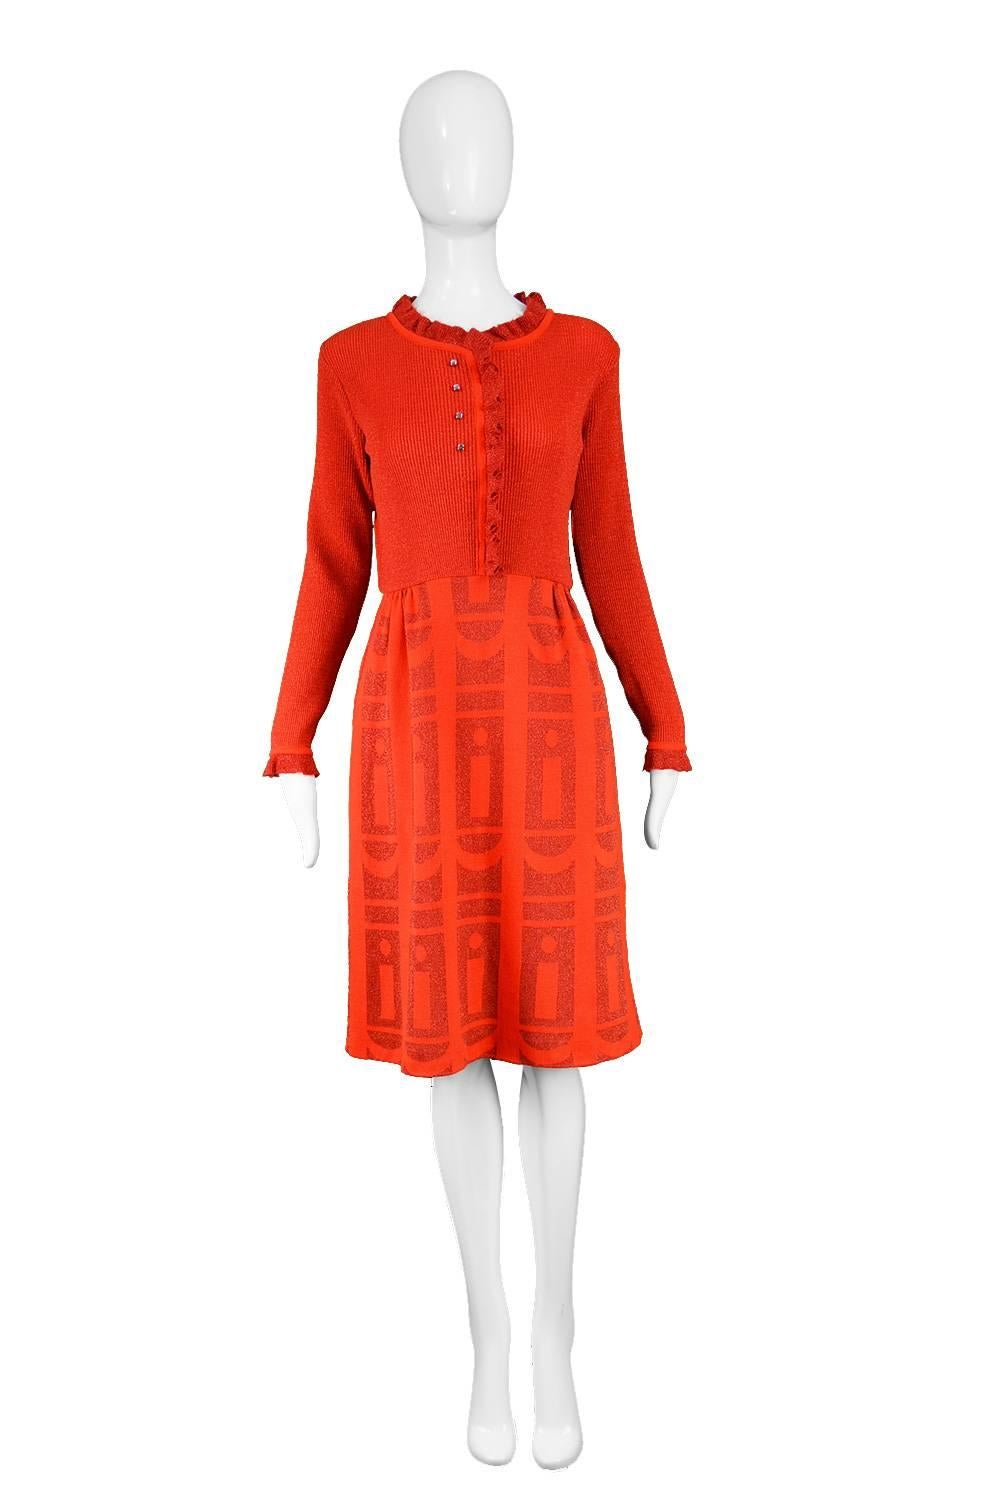 Louis Féraud for Rembrandt Vintage Red Lurex Long Sleeve Knit Dress, 1970s

Estimated Size: UK 10/ US 6/ EU 38. Please check measurements.
Bust - 34” / 86cm (has some stretch)
Waist - 27” / 68cm
Hips - up to 40” / 101cm
Length (Shoulder to Hem) -